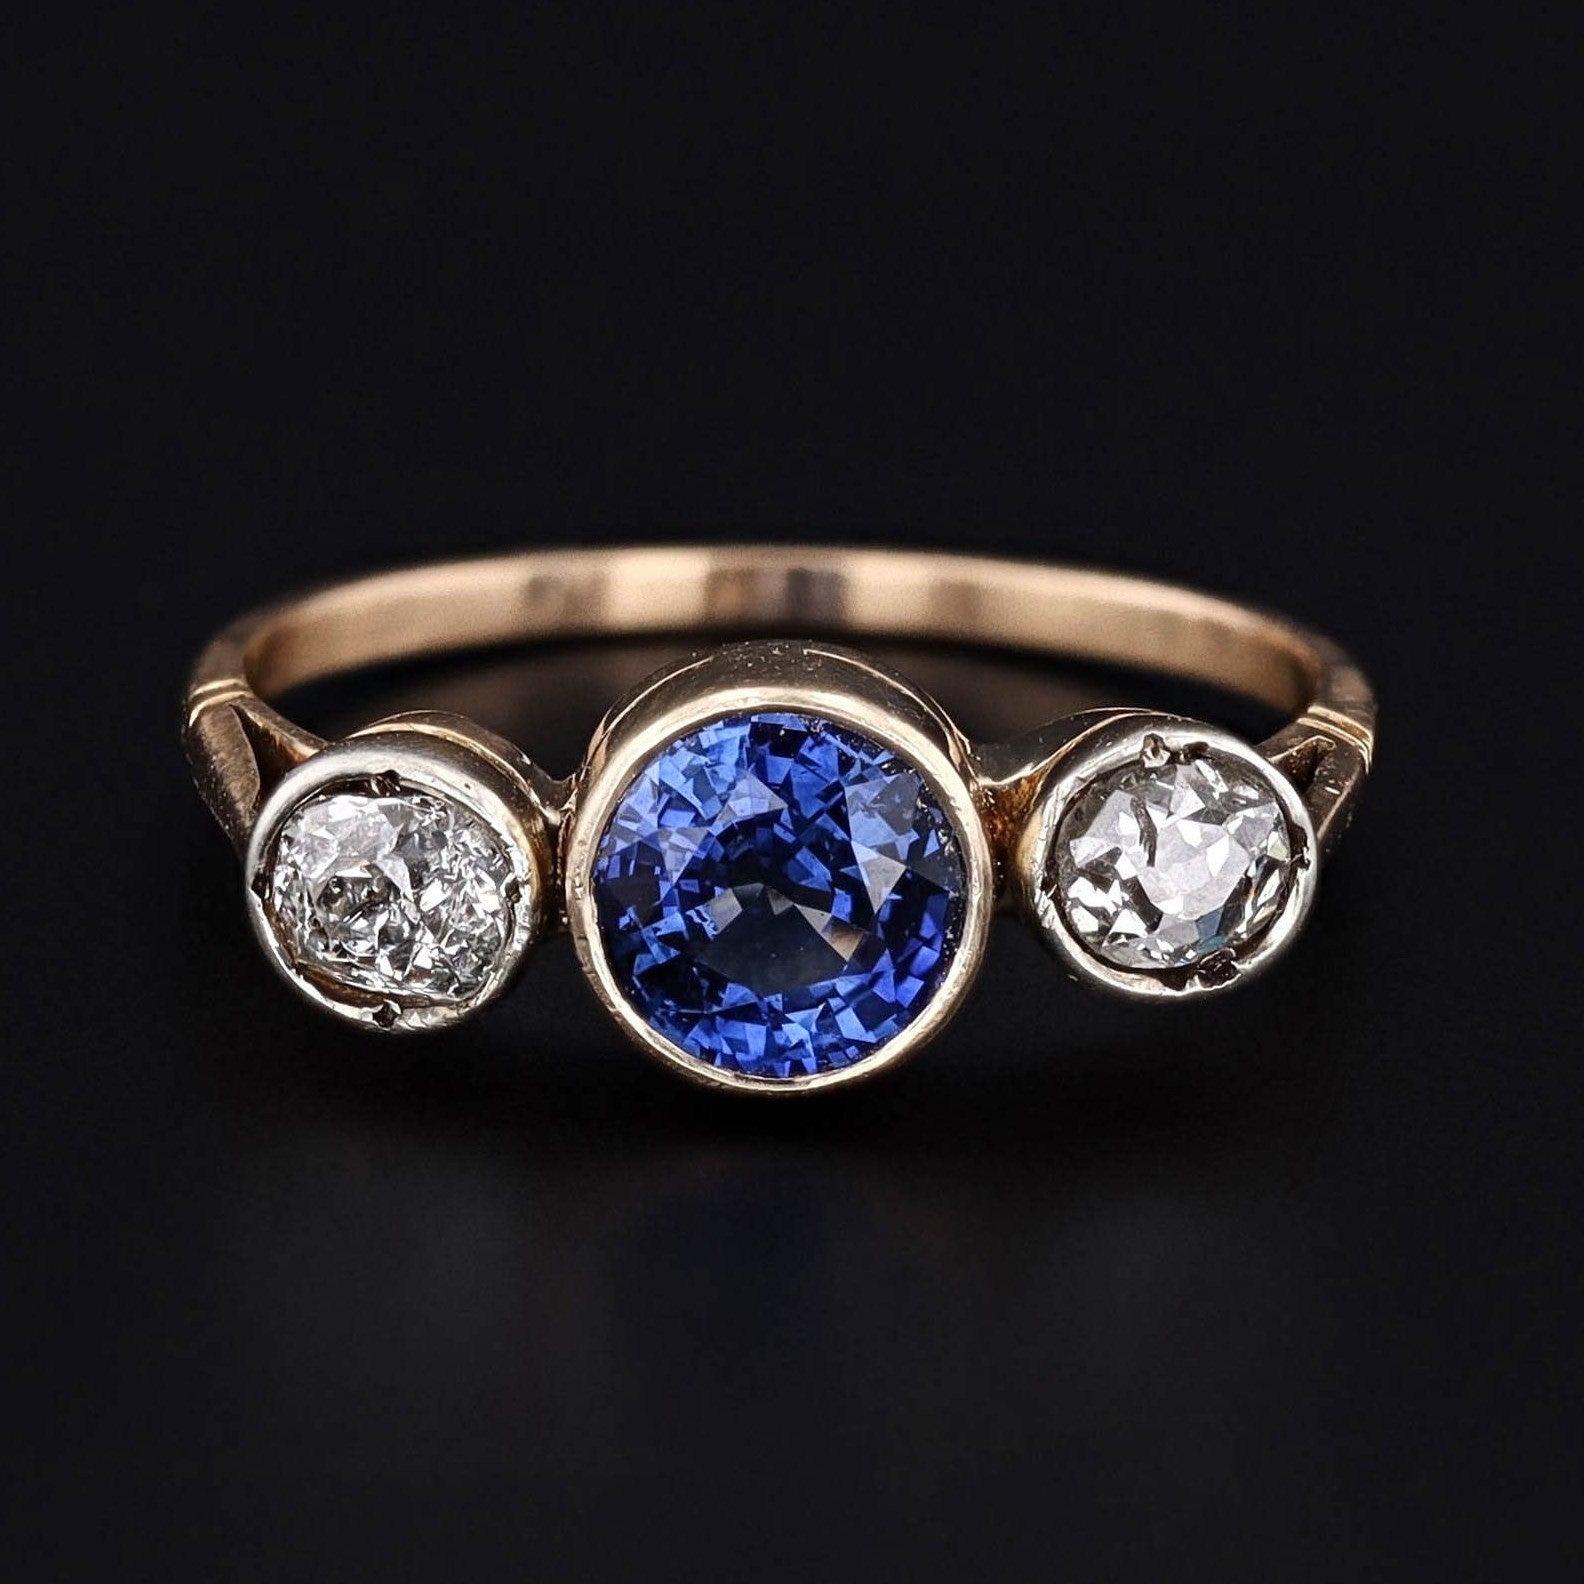 Antique Sapphire & Diamond Ring of 14k Gold